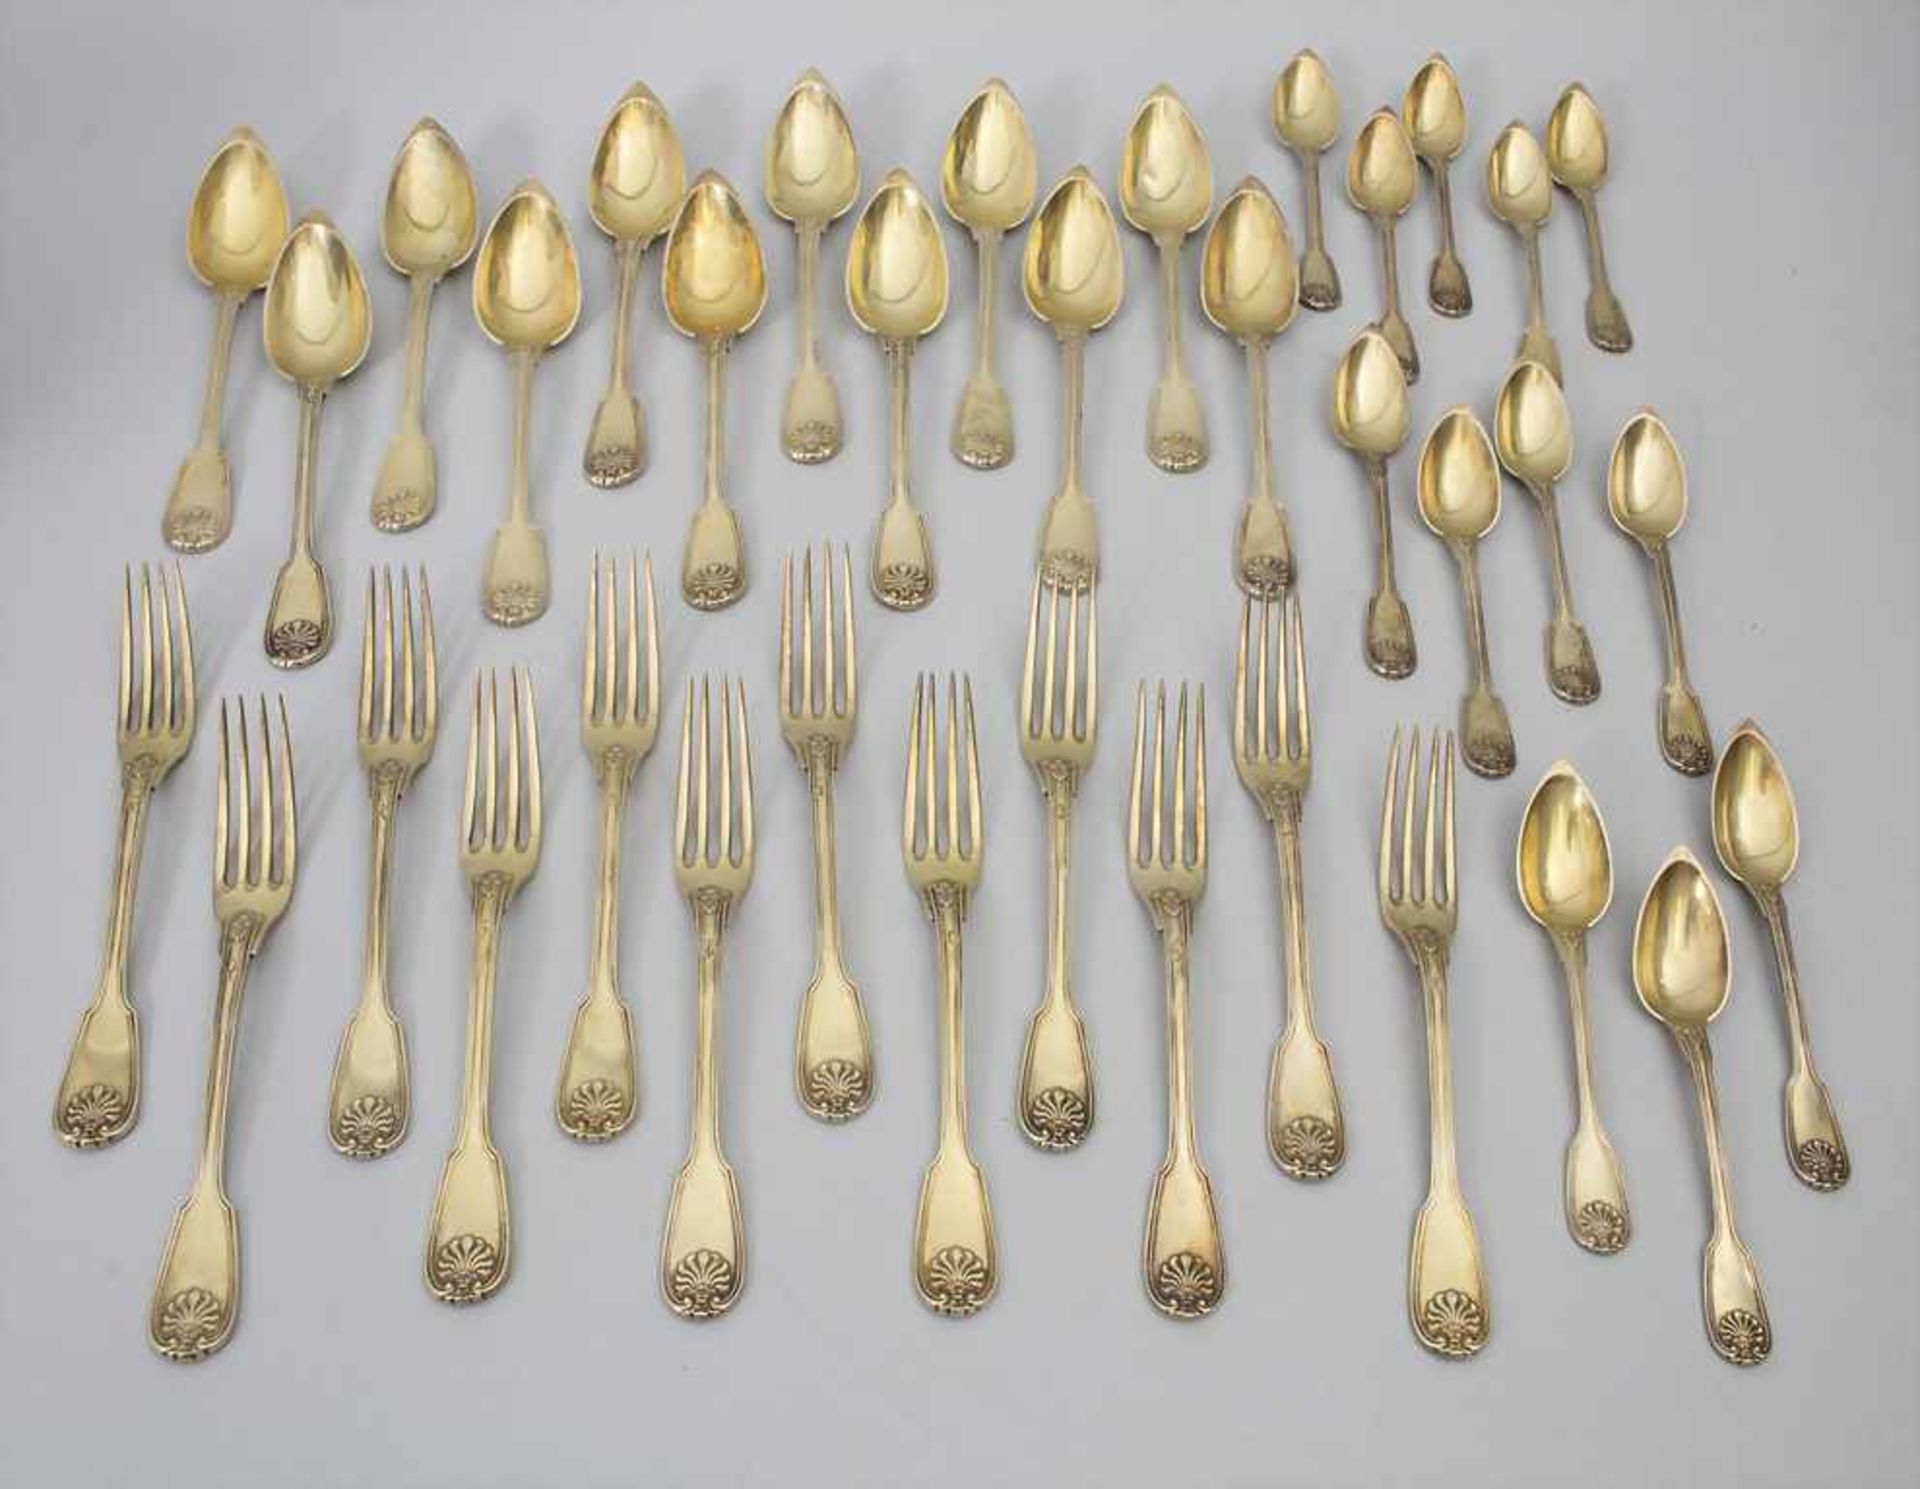 36 tlg. Silberbesteck / A 36-piece set of silver cutlery, Charles Salomon Mahler, Paris, 1824-18